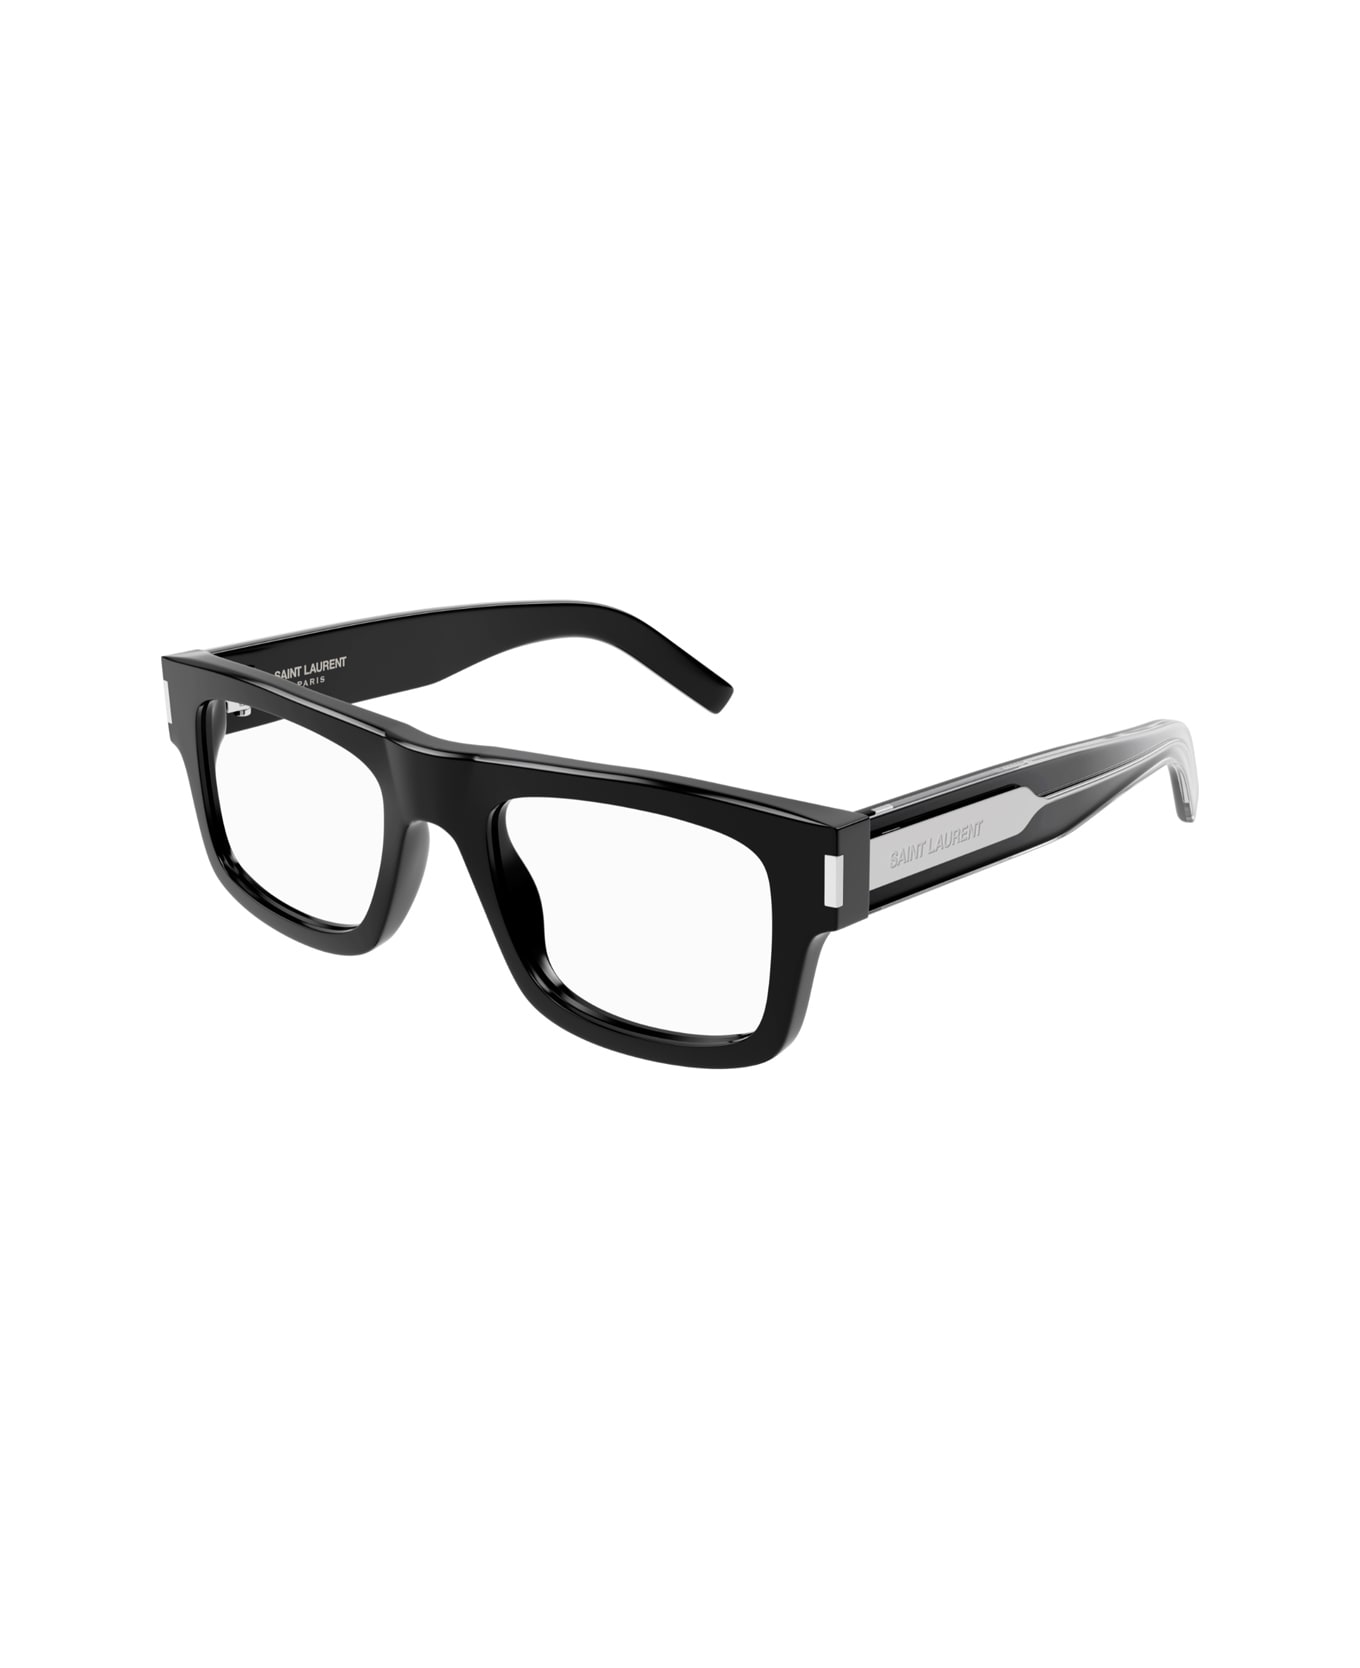 Saint Laurent Eyewear Sl 574 Glasses - Nero